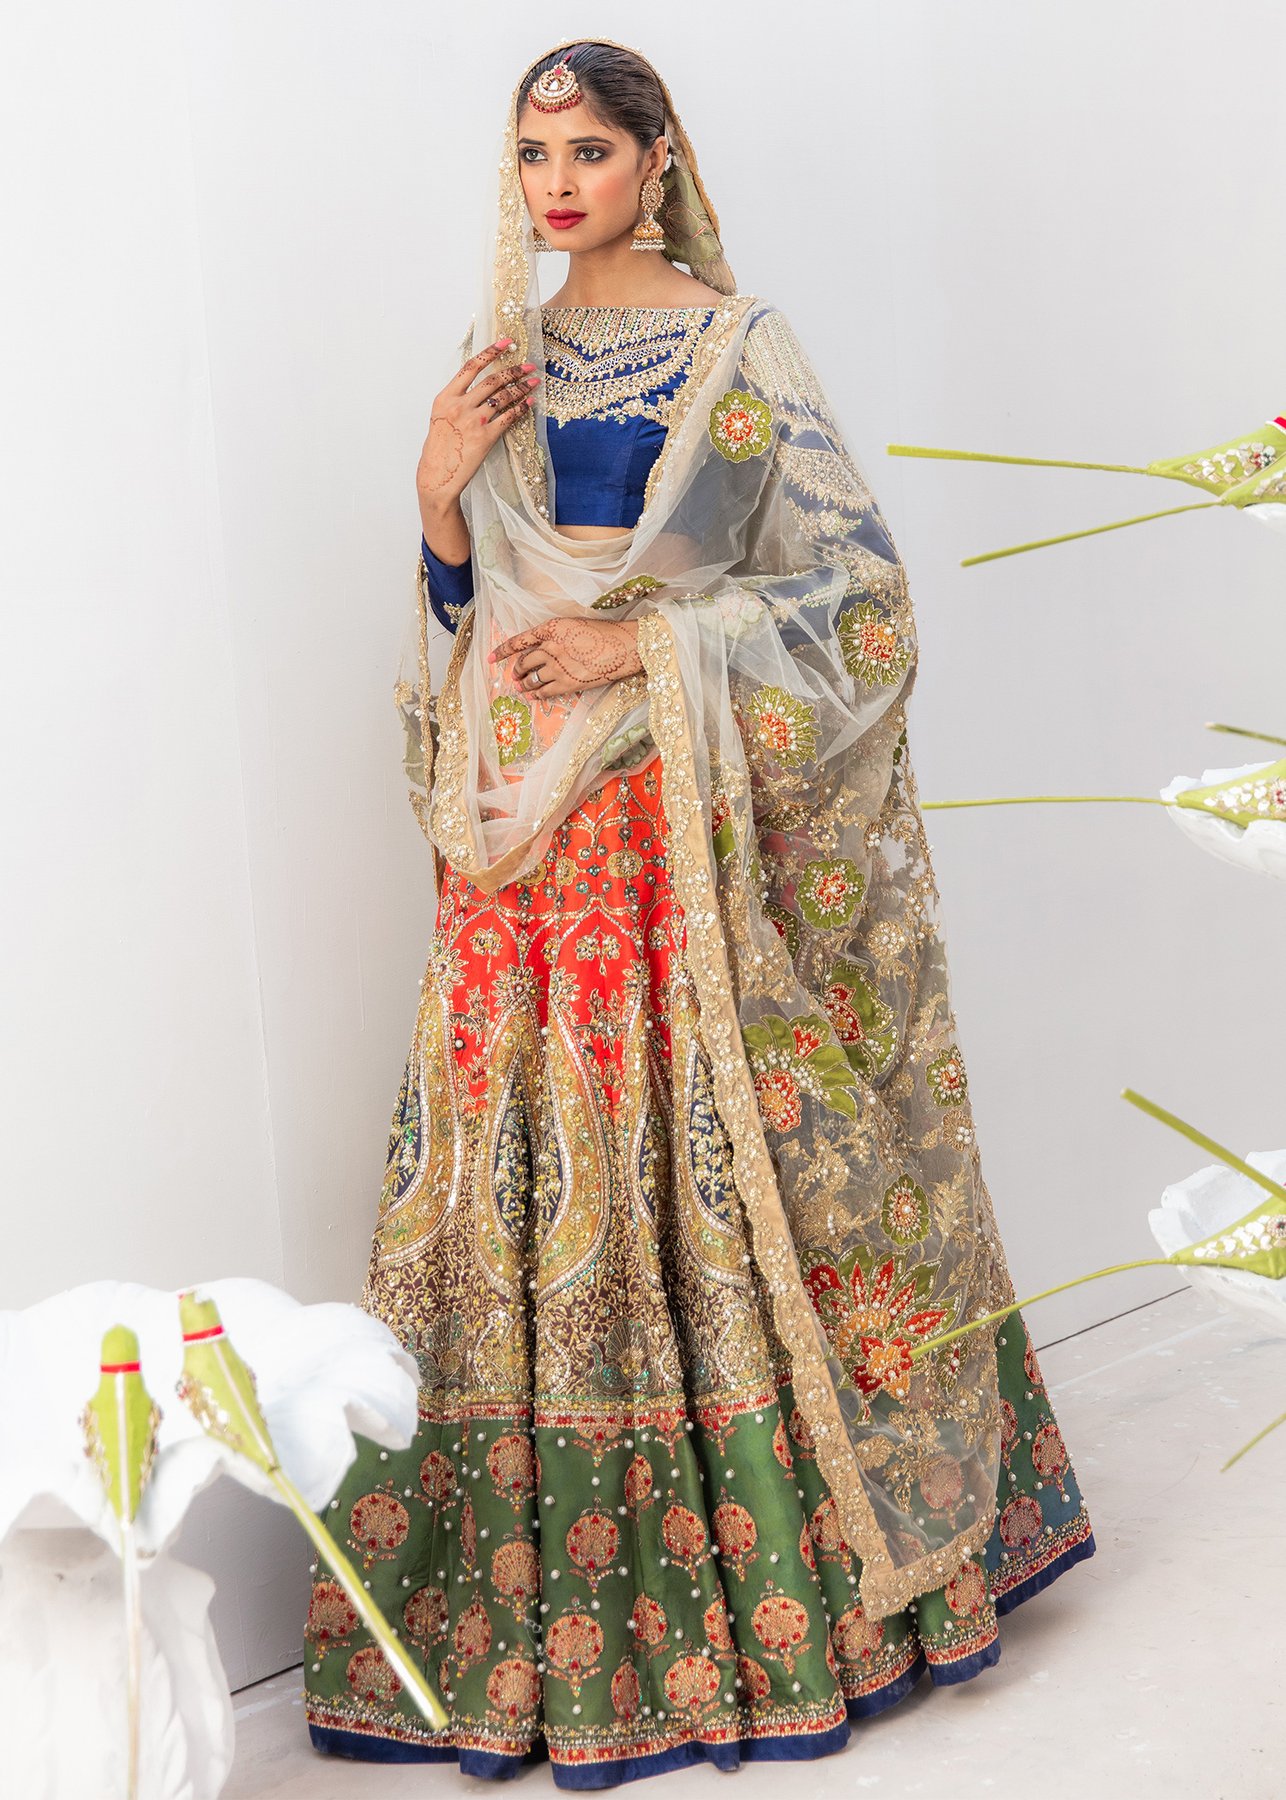 Ali Xeeshan Latest Bridal Dresses Latest Wedding Collection